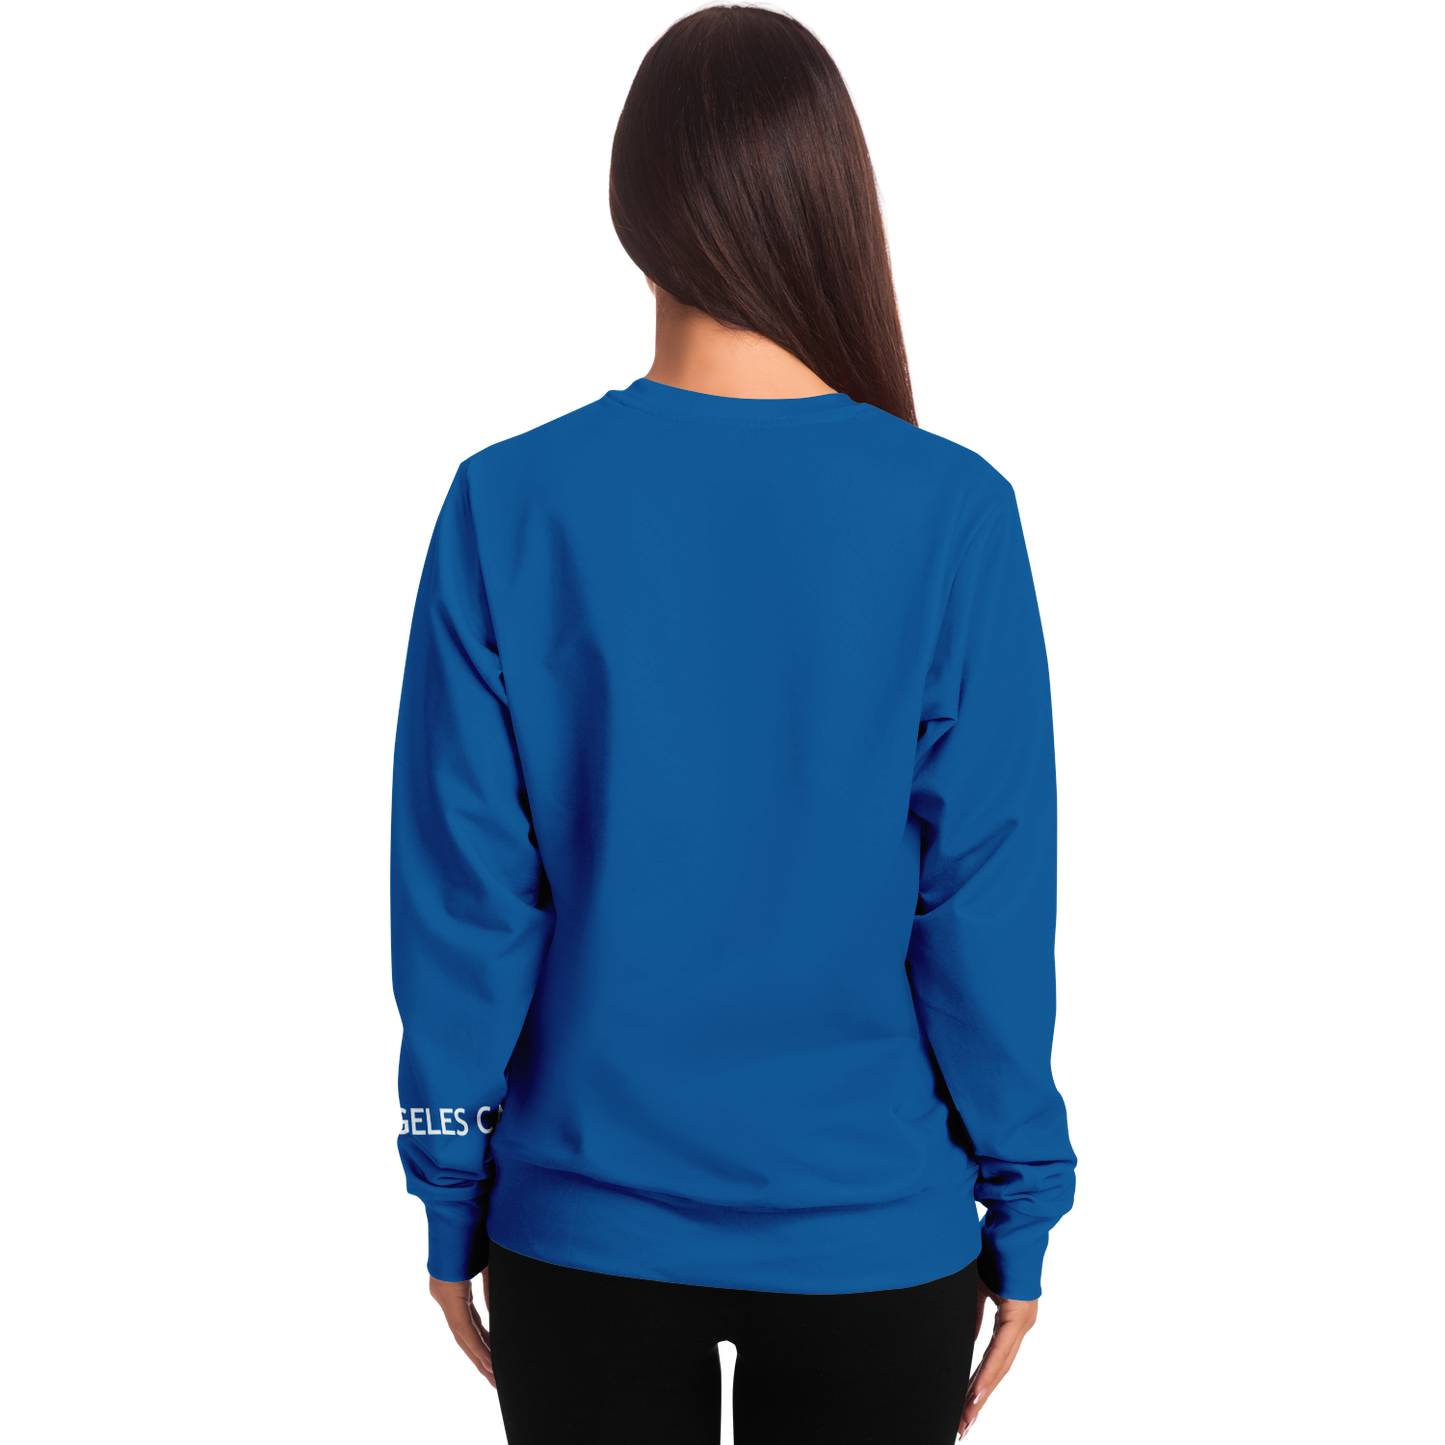 Los Angeles Blue Long Sleeve Shirt